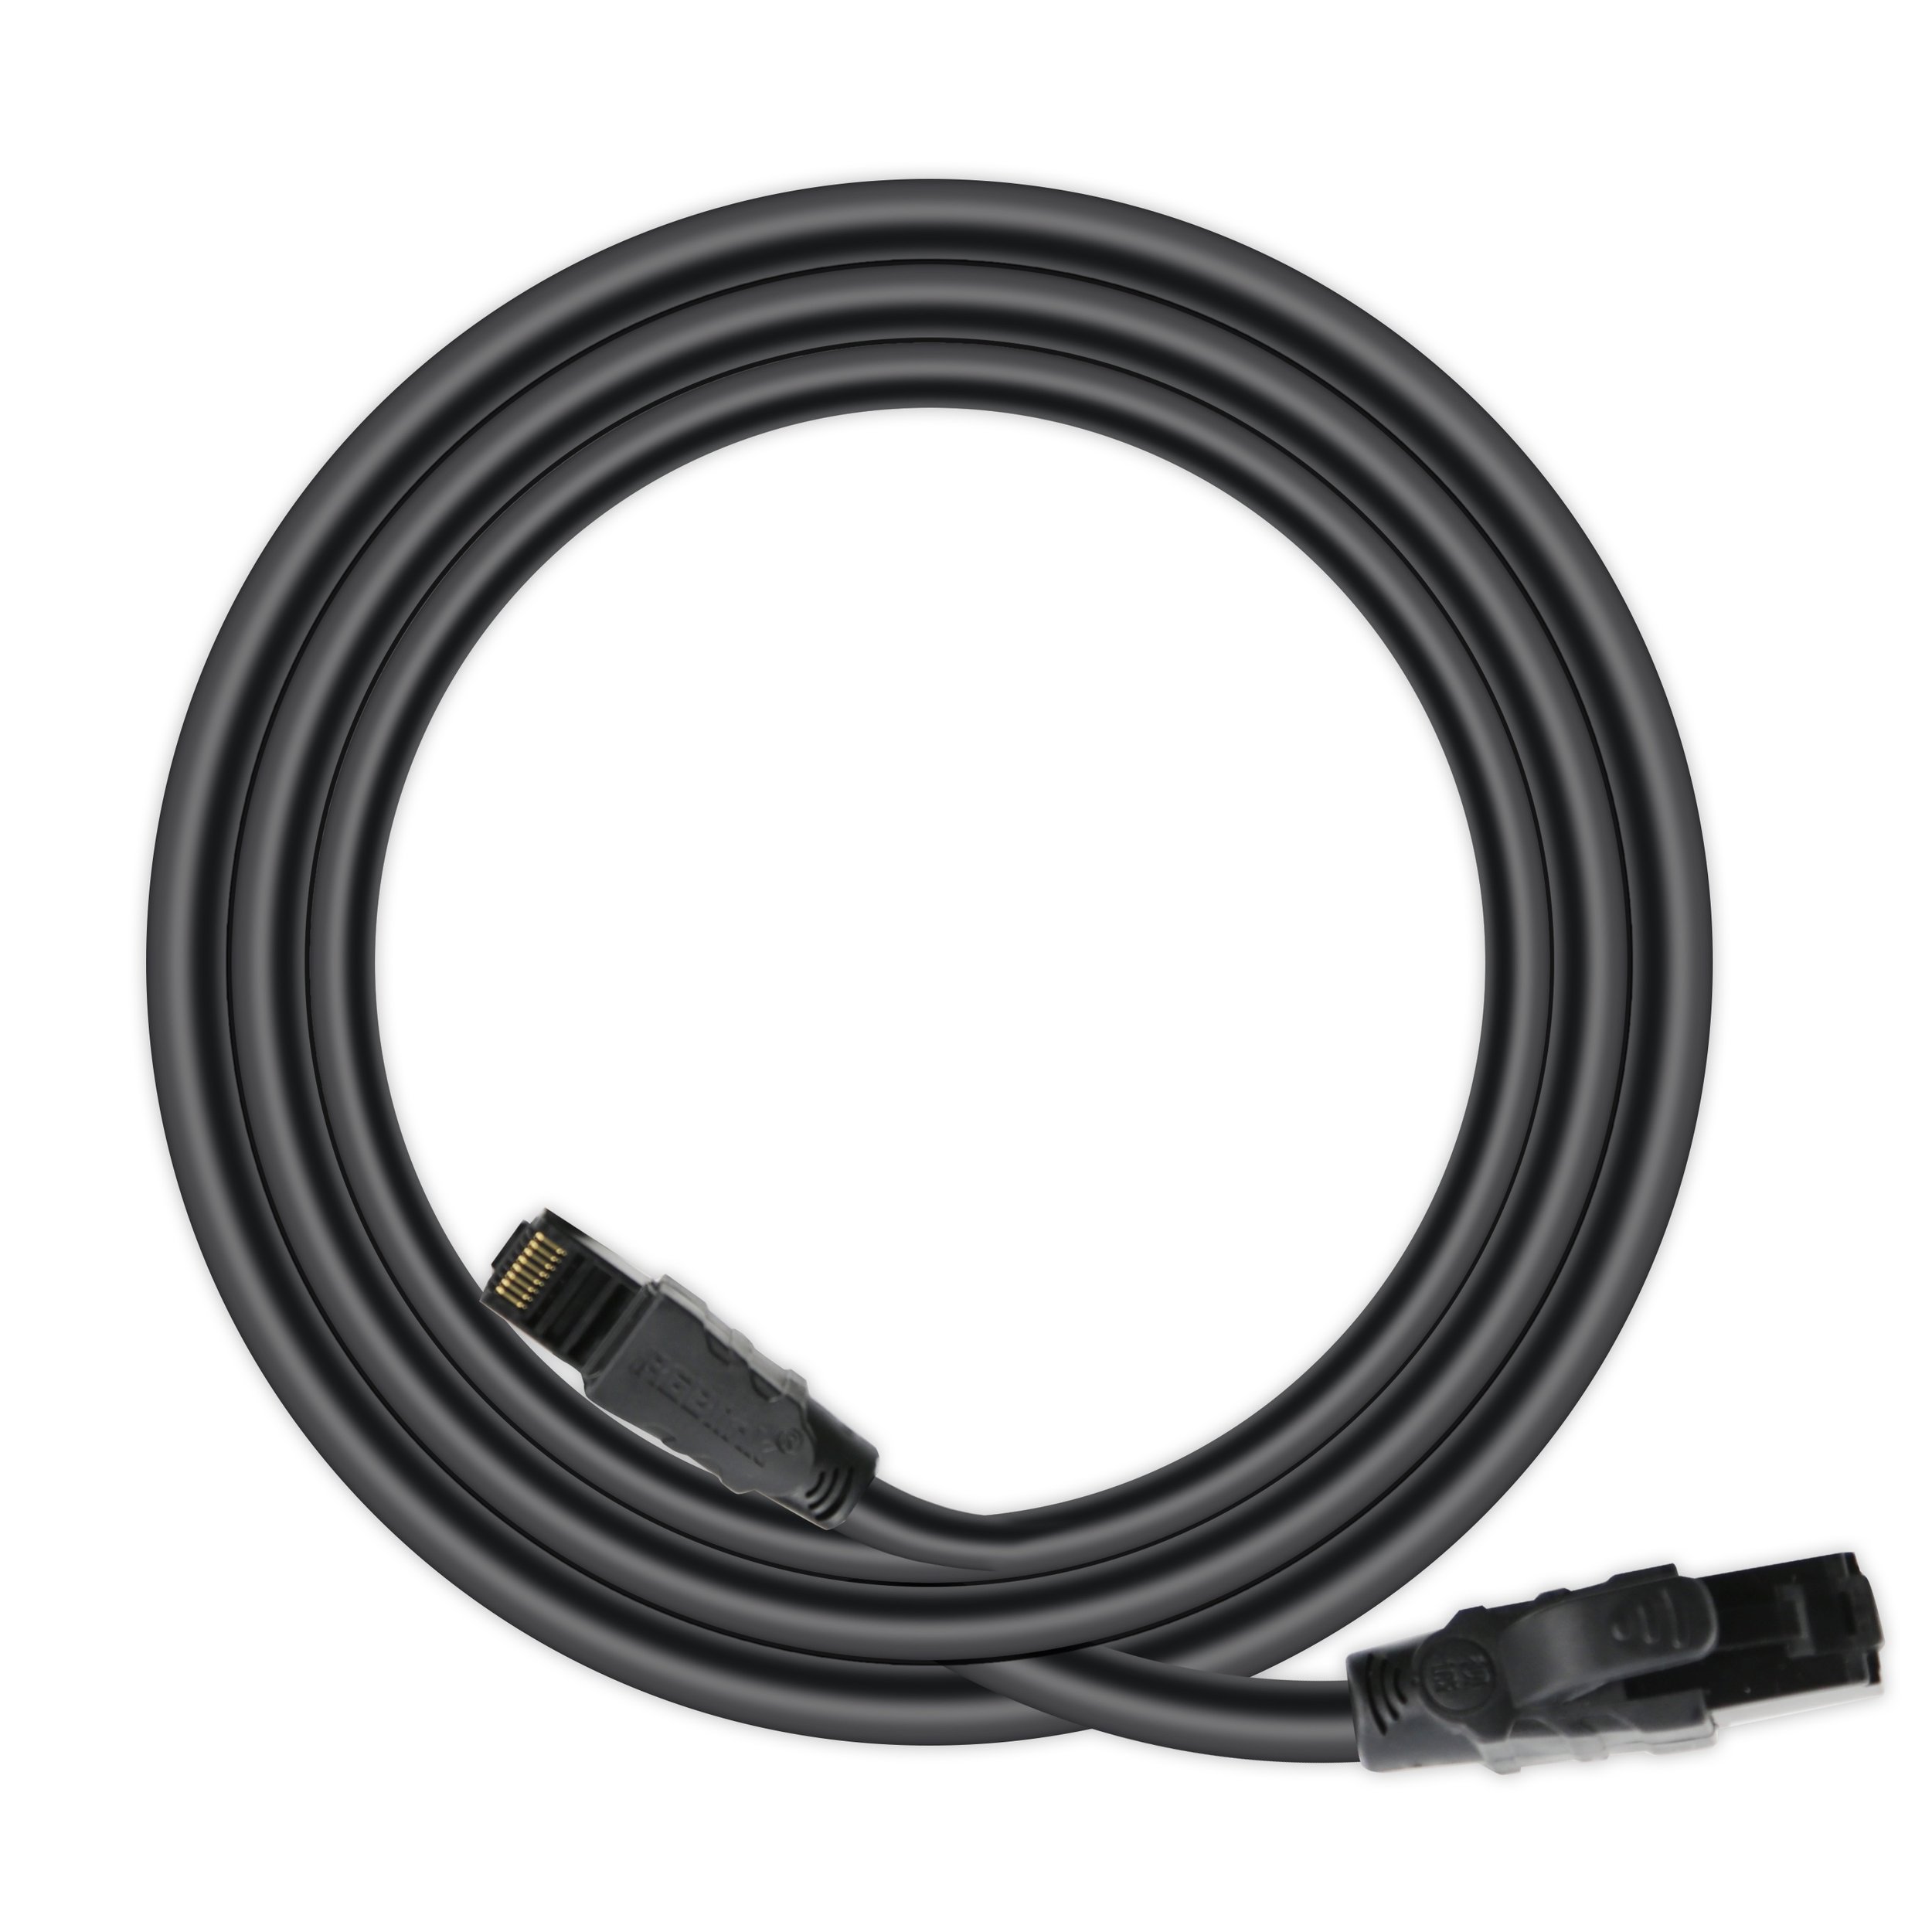 Cable for mini-edge bundle[56].jpg